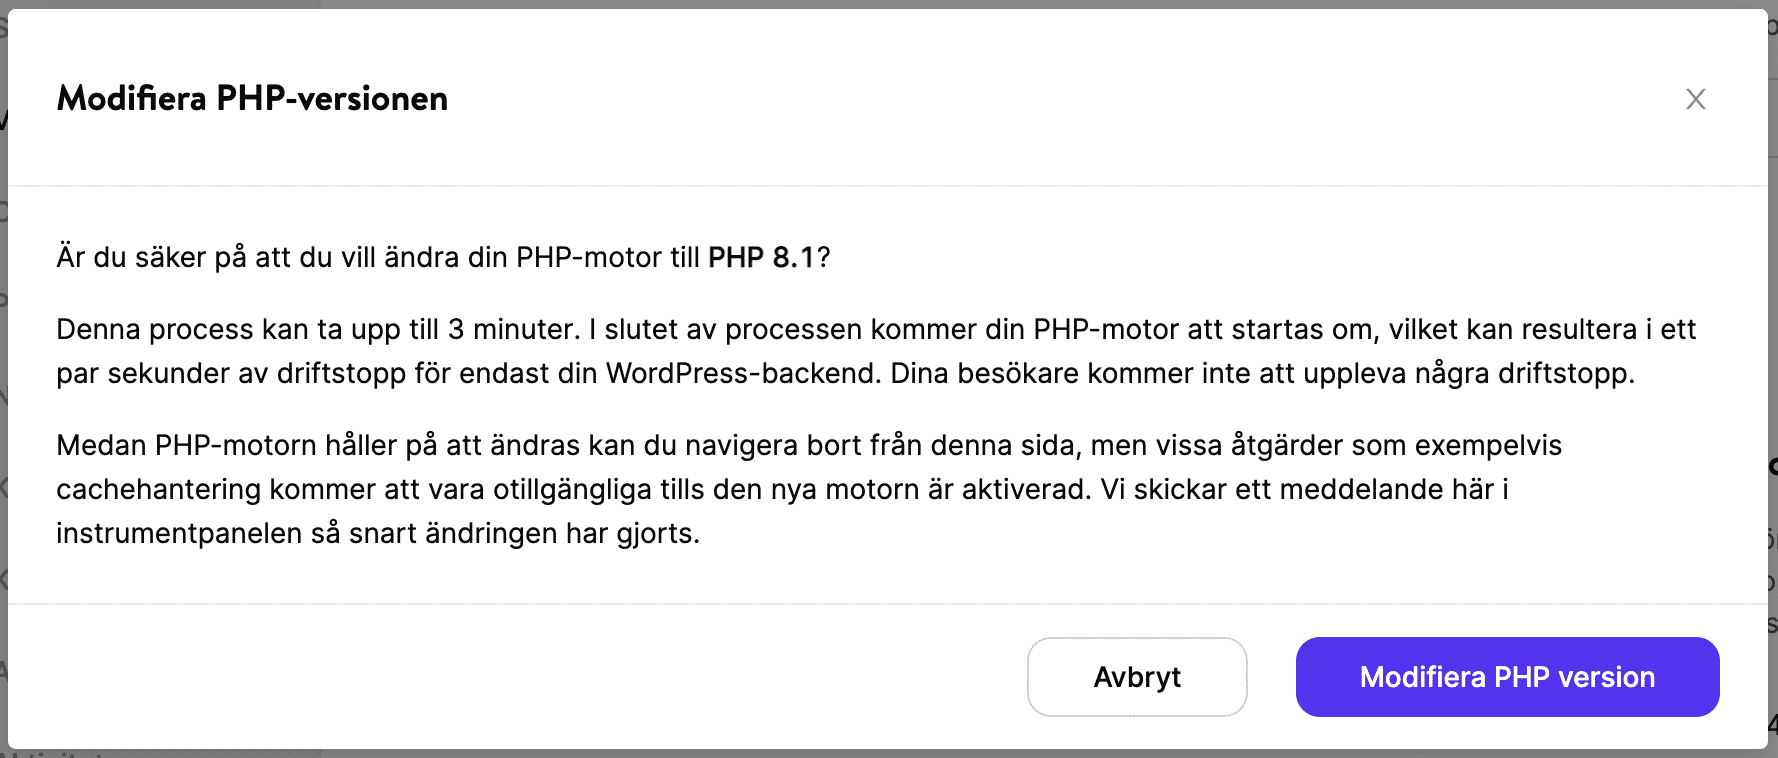 Modifiera PHP-version.